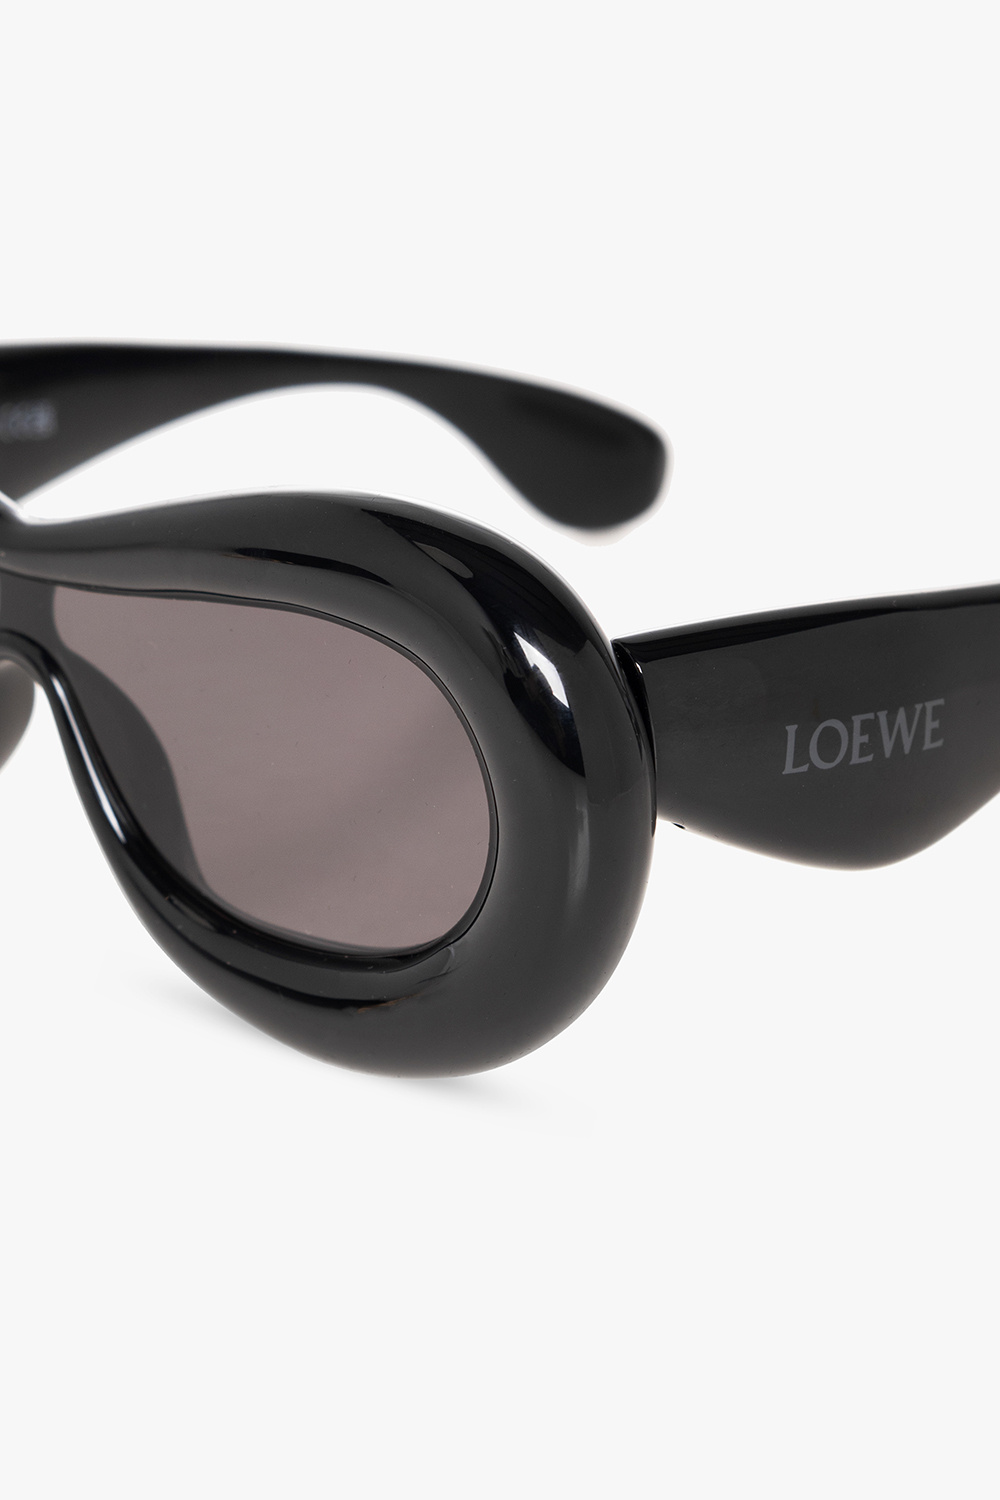 Loewe Supreme Spring Sunglasses